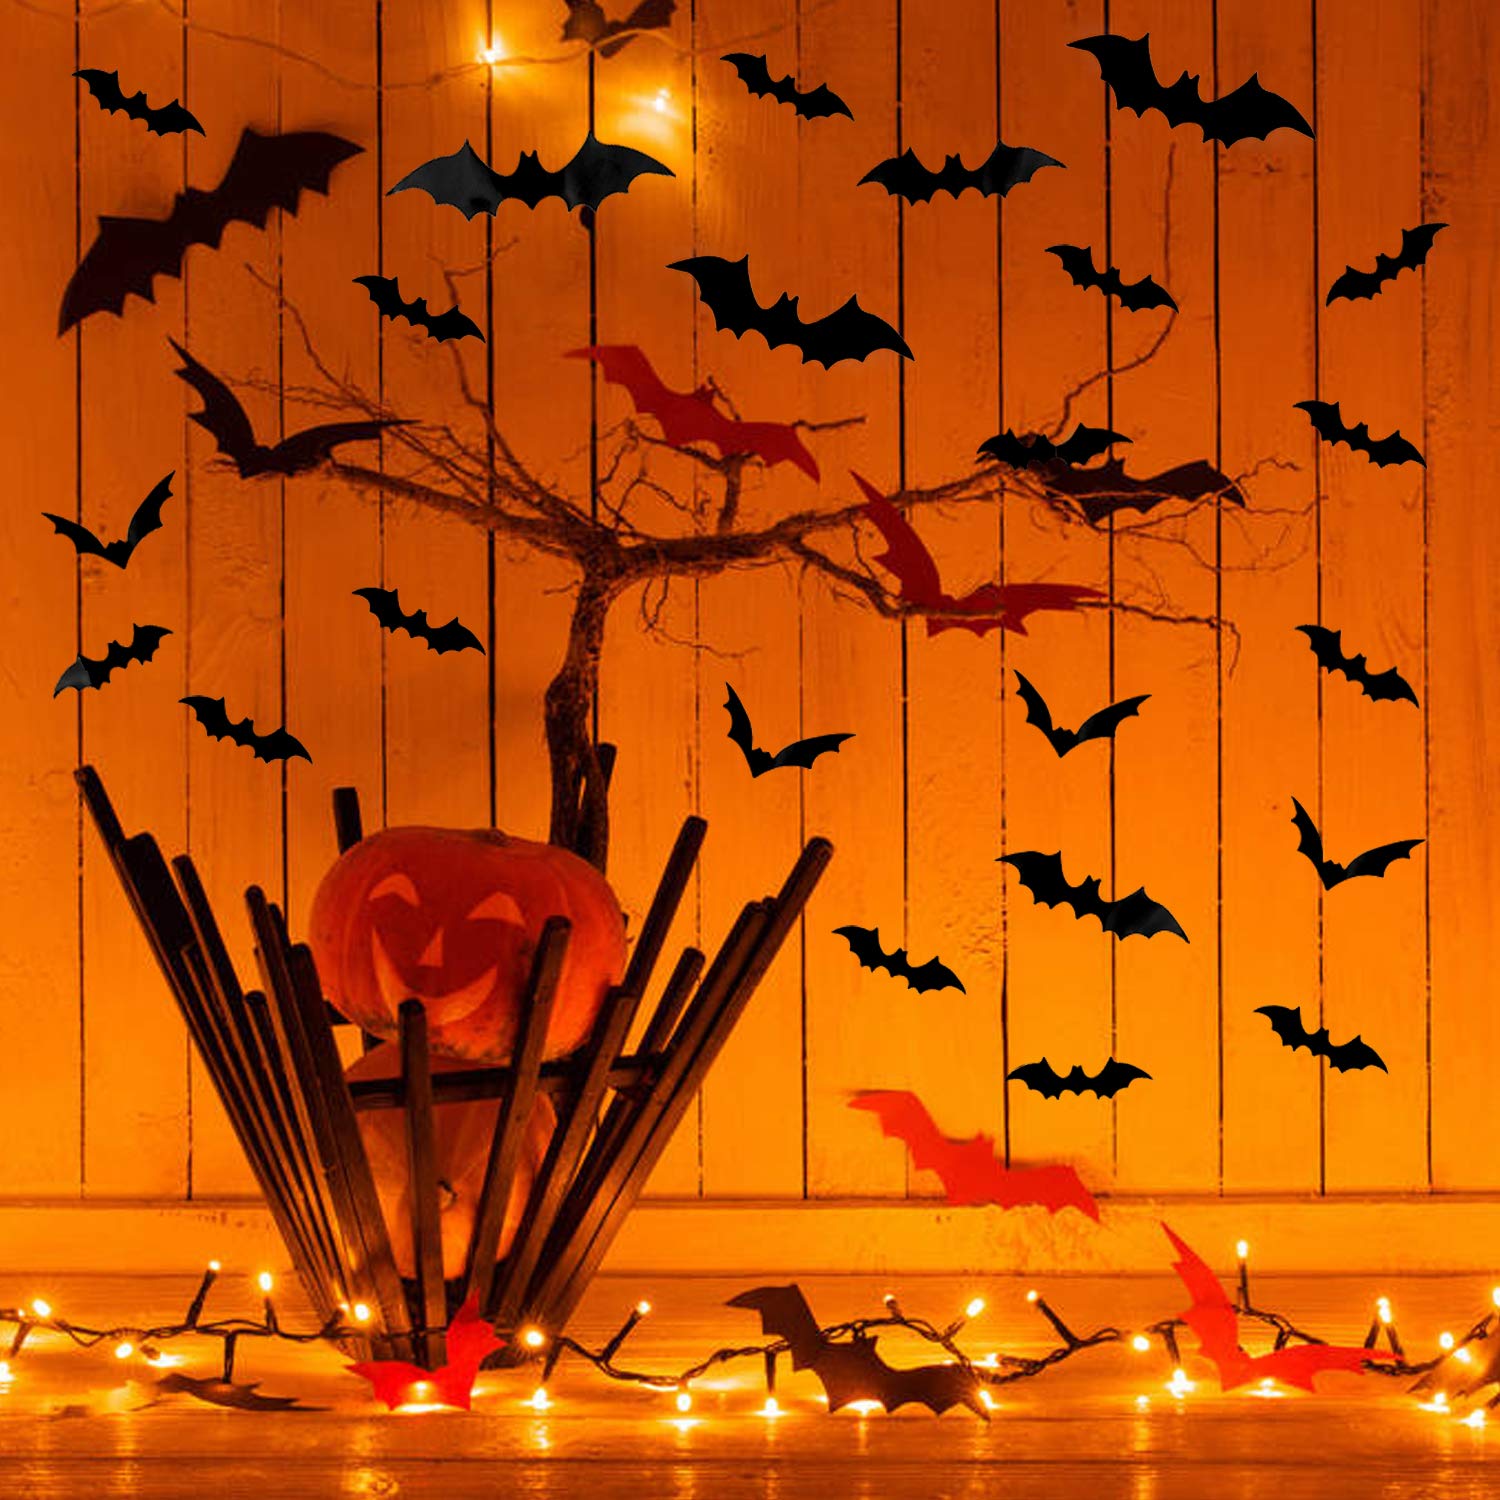 DIYASY Bats Wall Decor,120 Pcs 3D Bat Halloween Decoration Stickers for Home Decor 4 Size Waterproof Black Spooky Bats for Room Décor